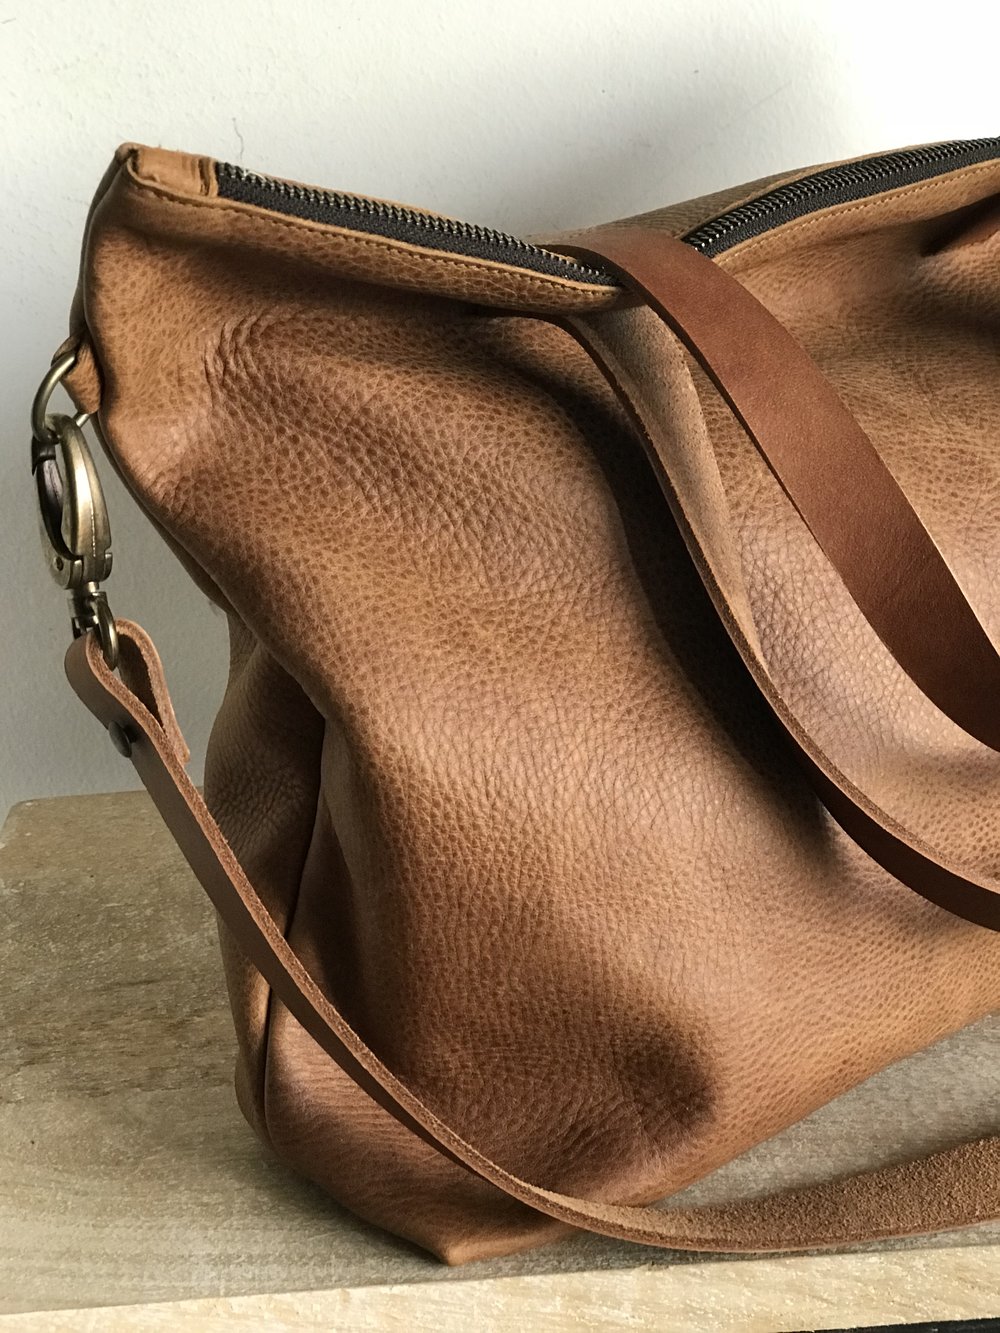 Leather Handbags - Crossbody, Bucket, Hobo – Strandbags Australia